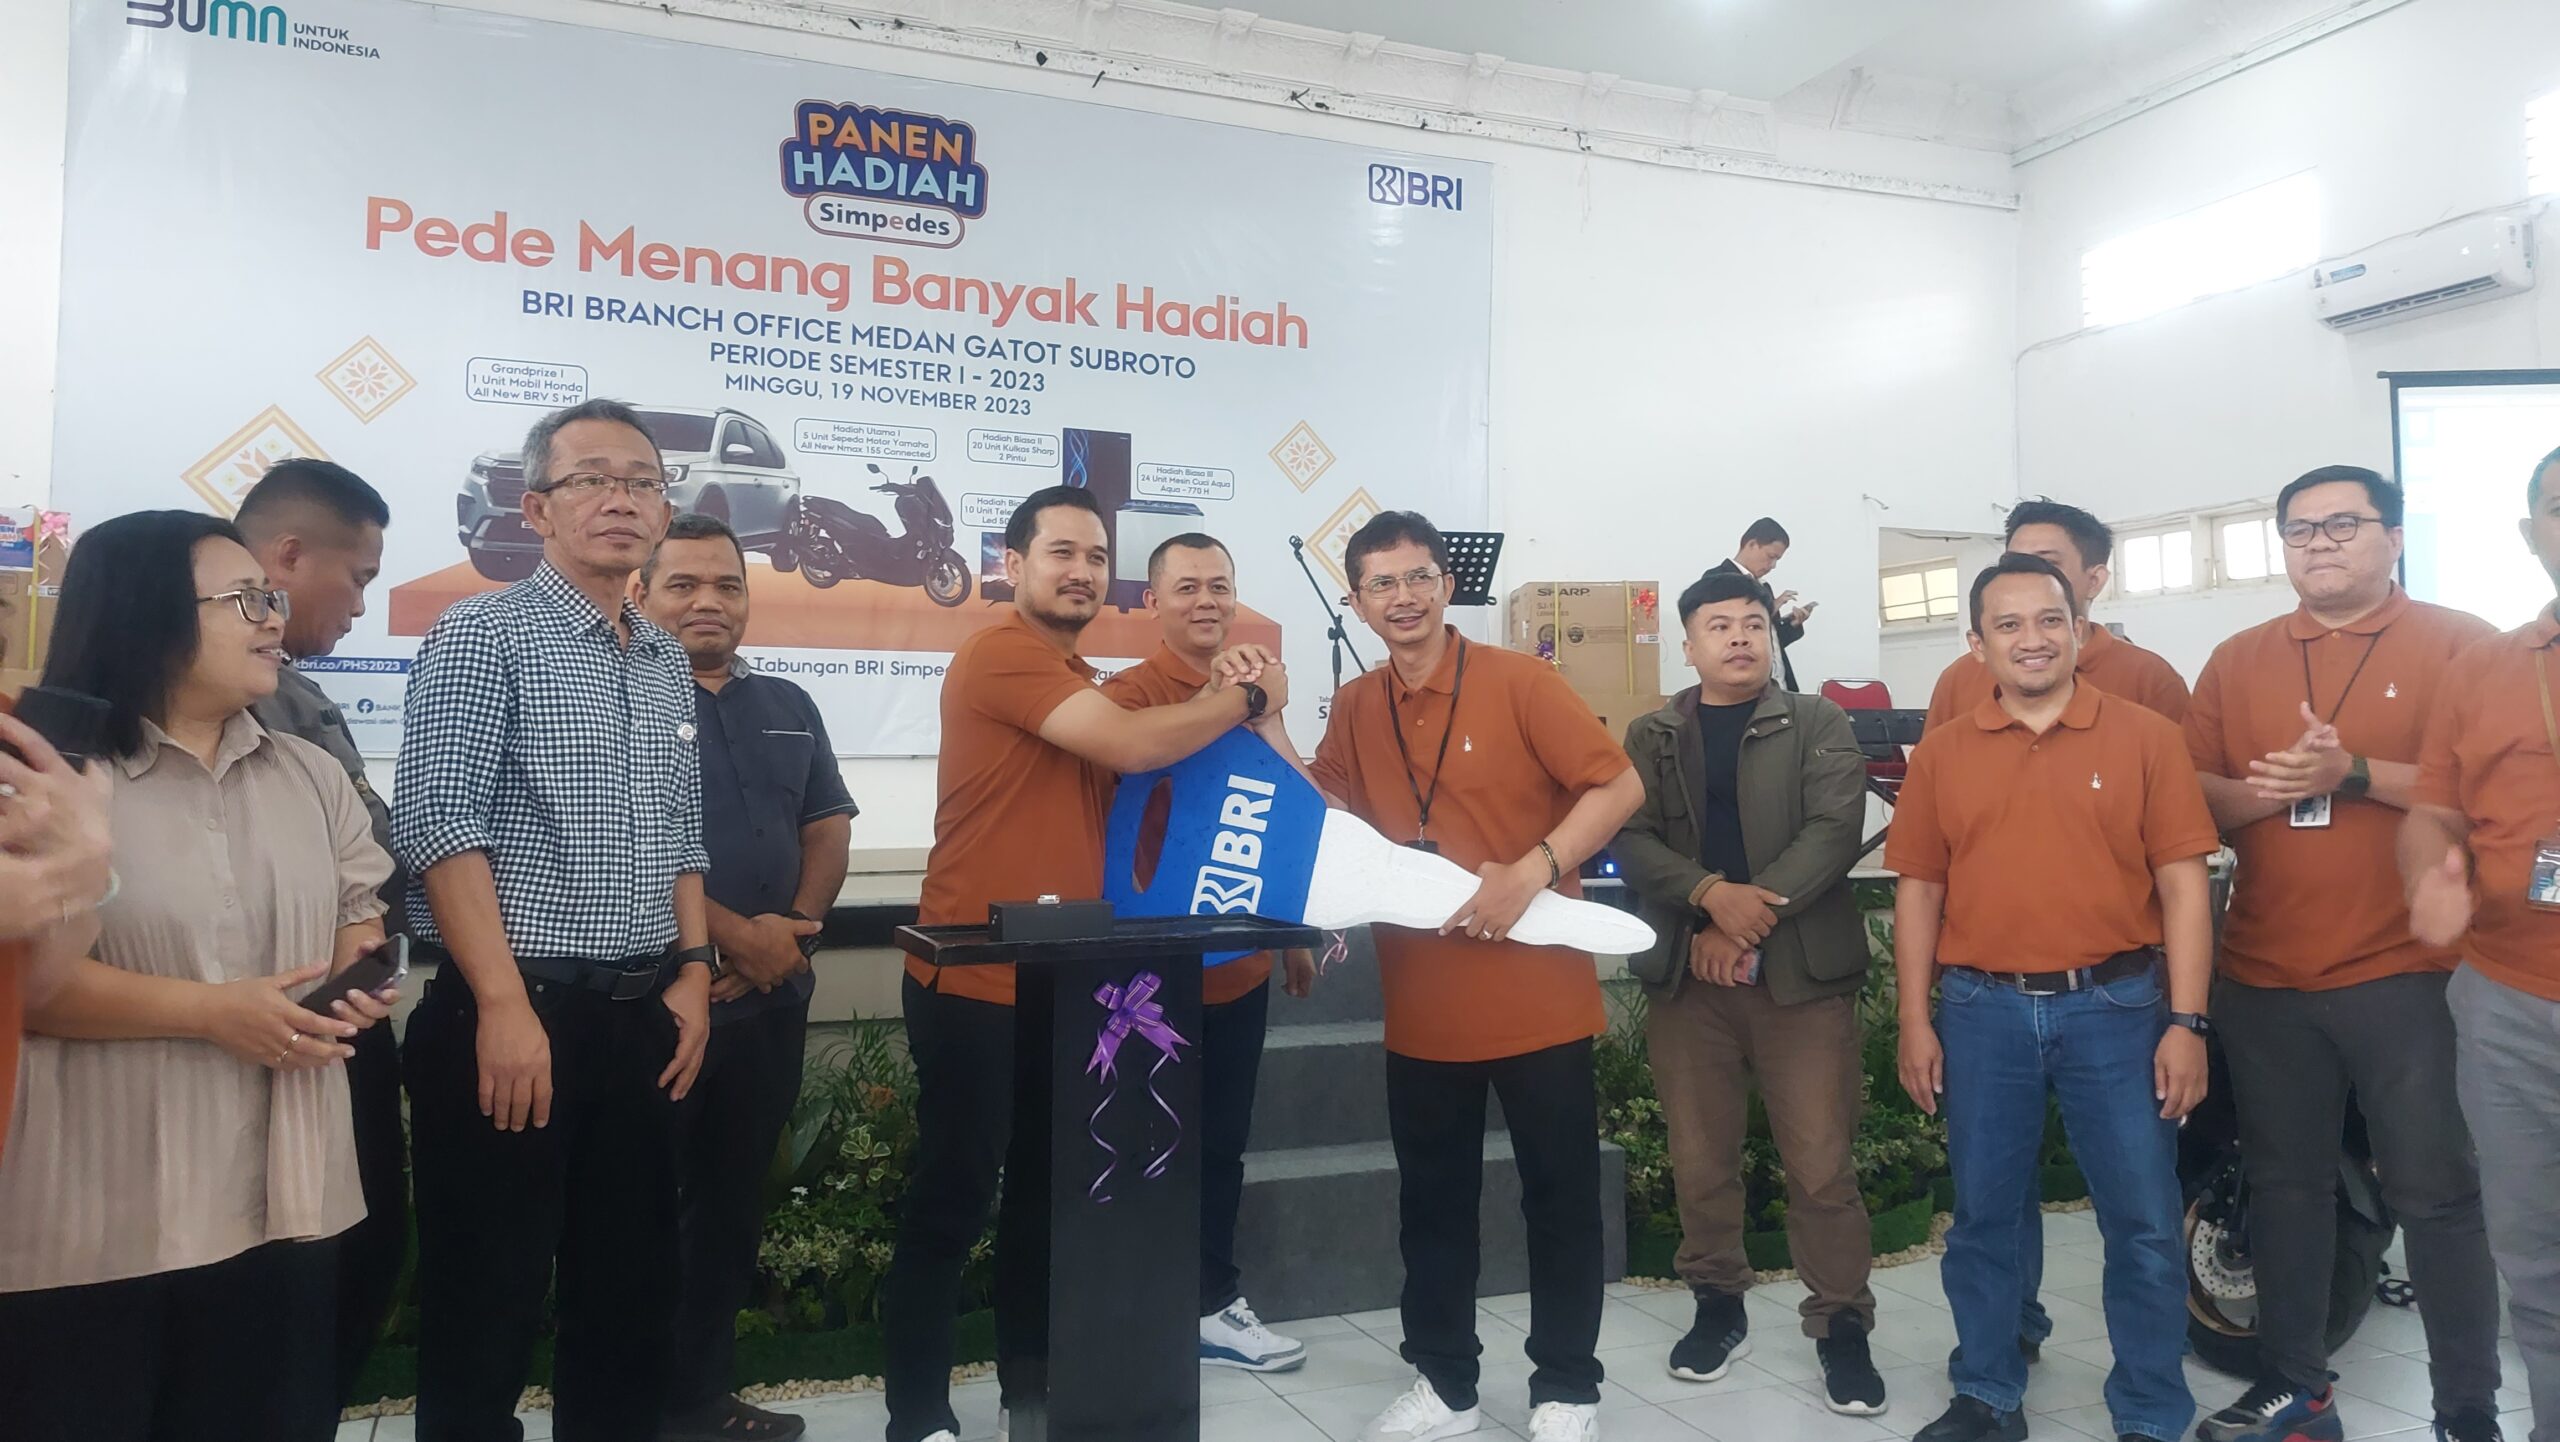 Pimpinan Cabang BRI Medan Gatot Subroto, Wisnu Wirawan secara simbolis menyerahkan hadiah Grand Prize satu unit mobil All New BRV Honda kepada Kepala Unit BRI Petisah untuk selanjutnya diserahkan kepada nasabah pemenang.